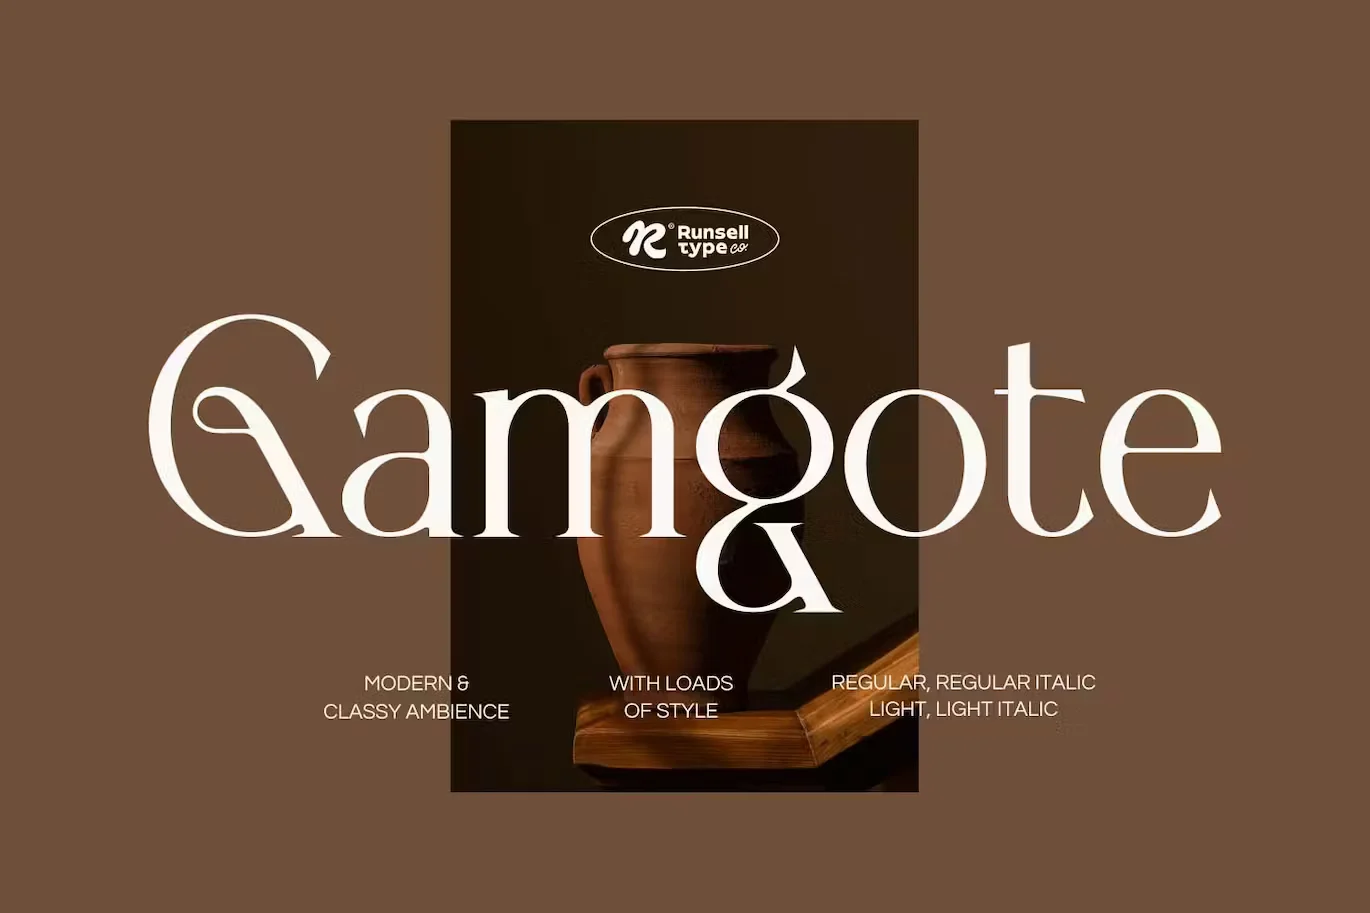 Gamgote - Luxury